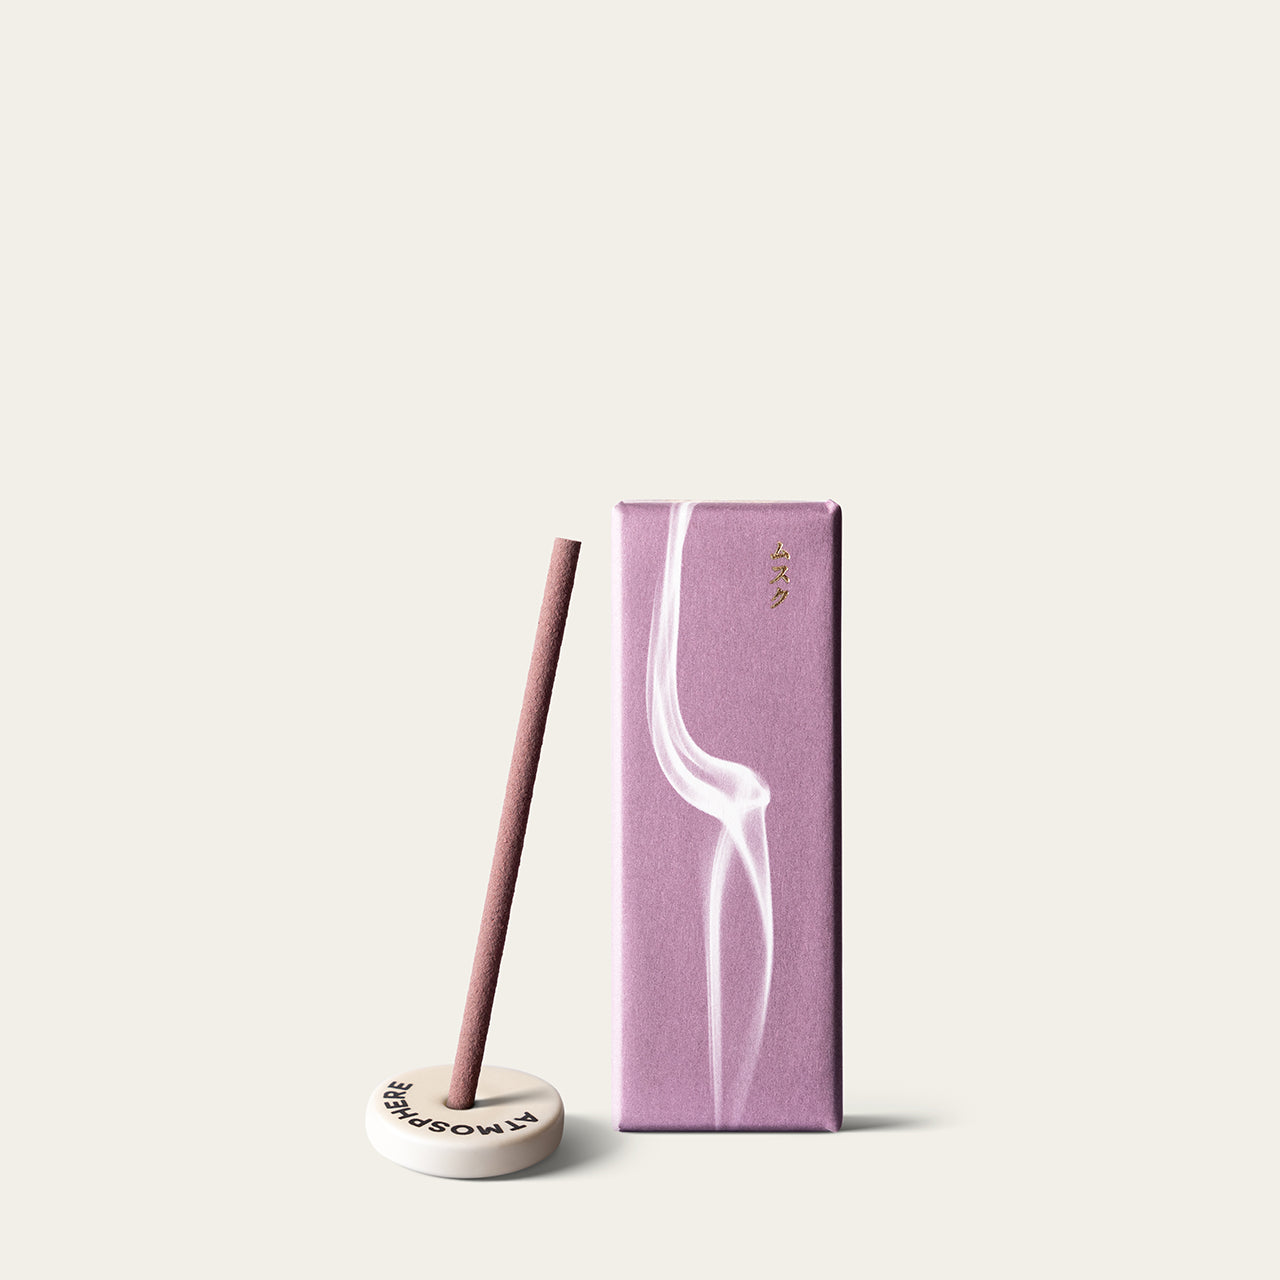 Kyukyodo Fragrance Mini Musk Japanese incense sticks (20 sticks) with Atmosphere ceramic incense holder